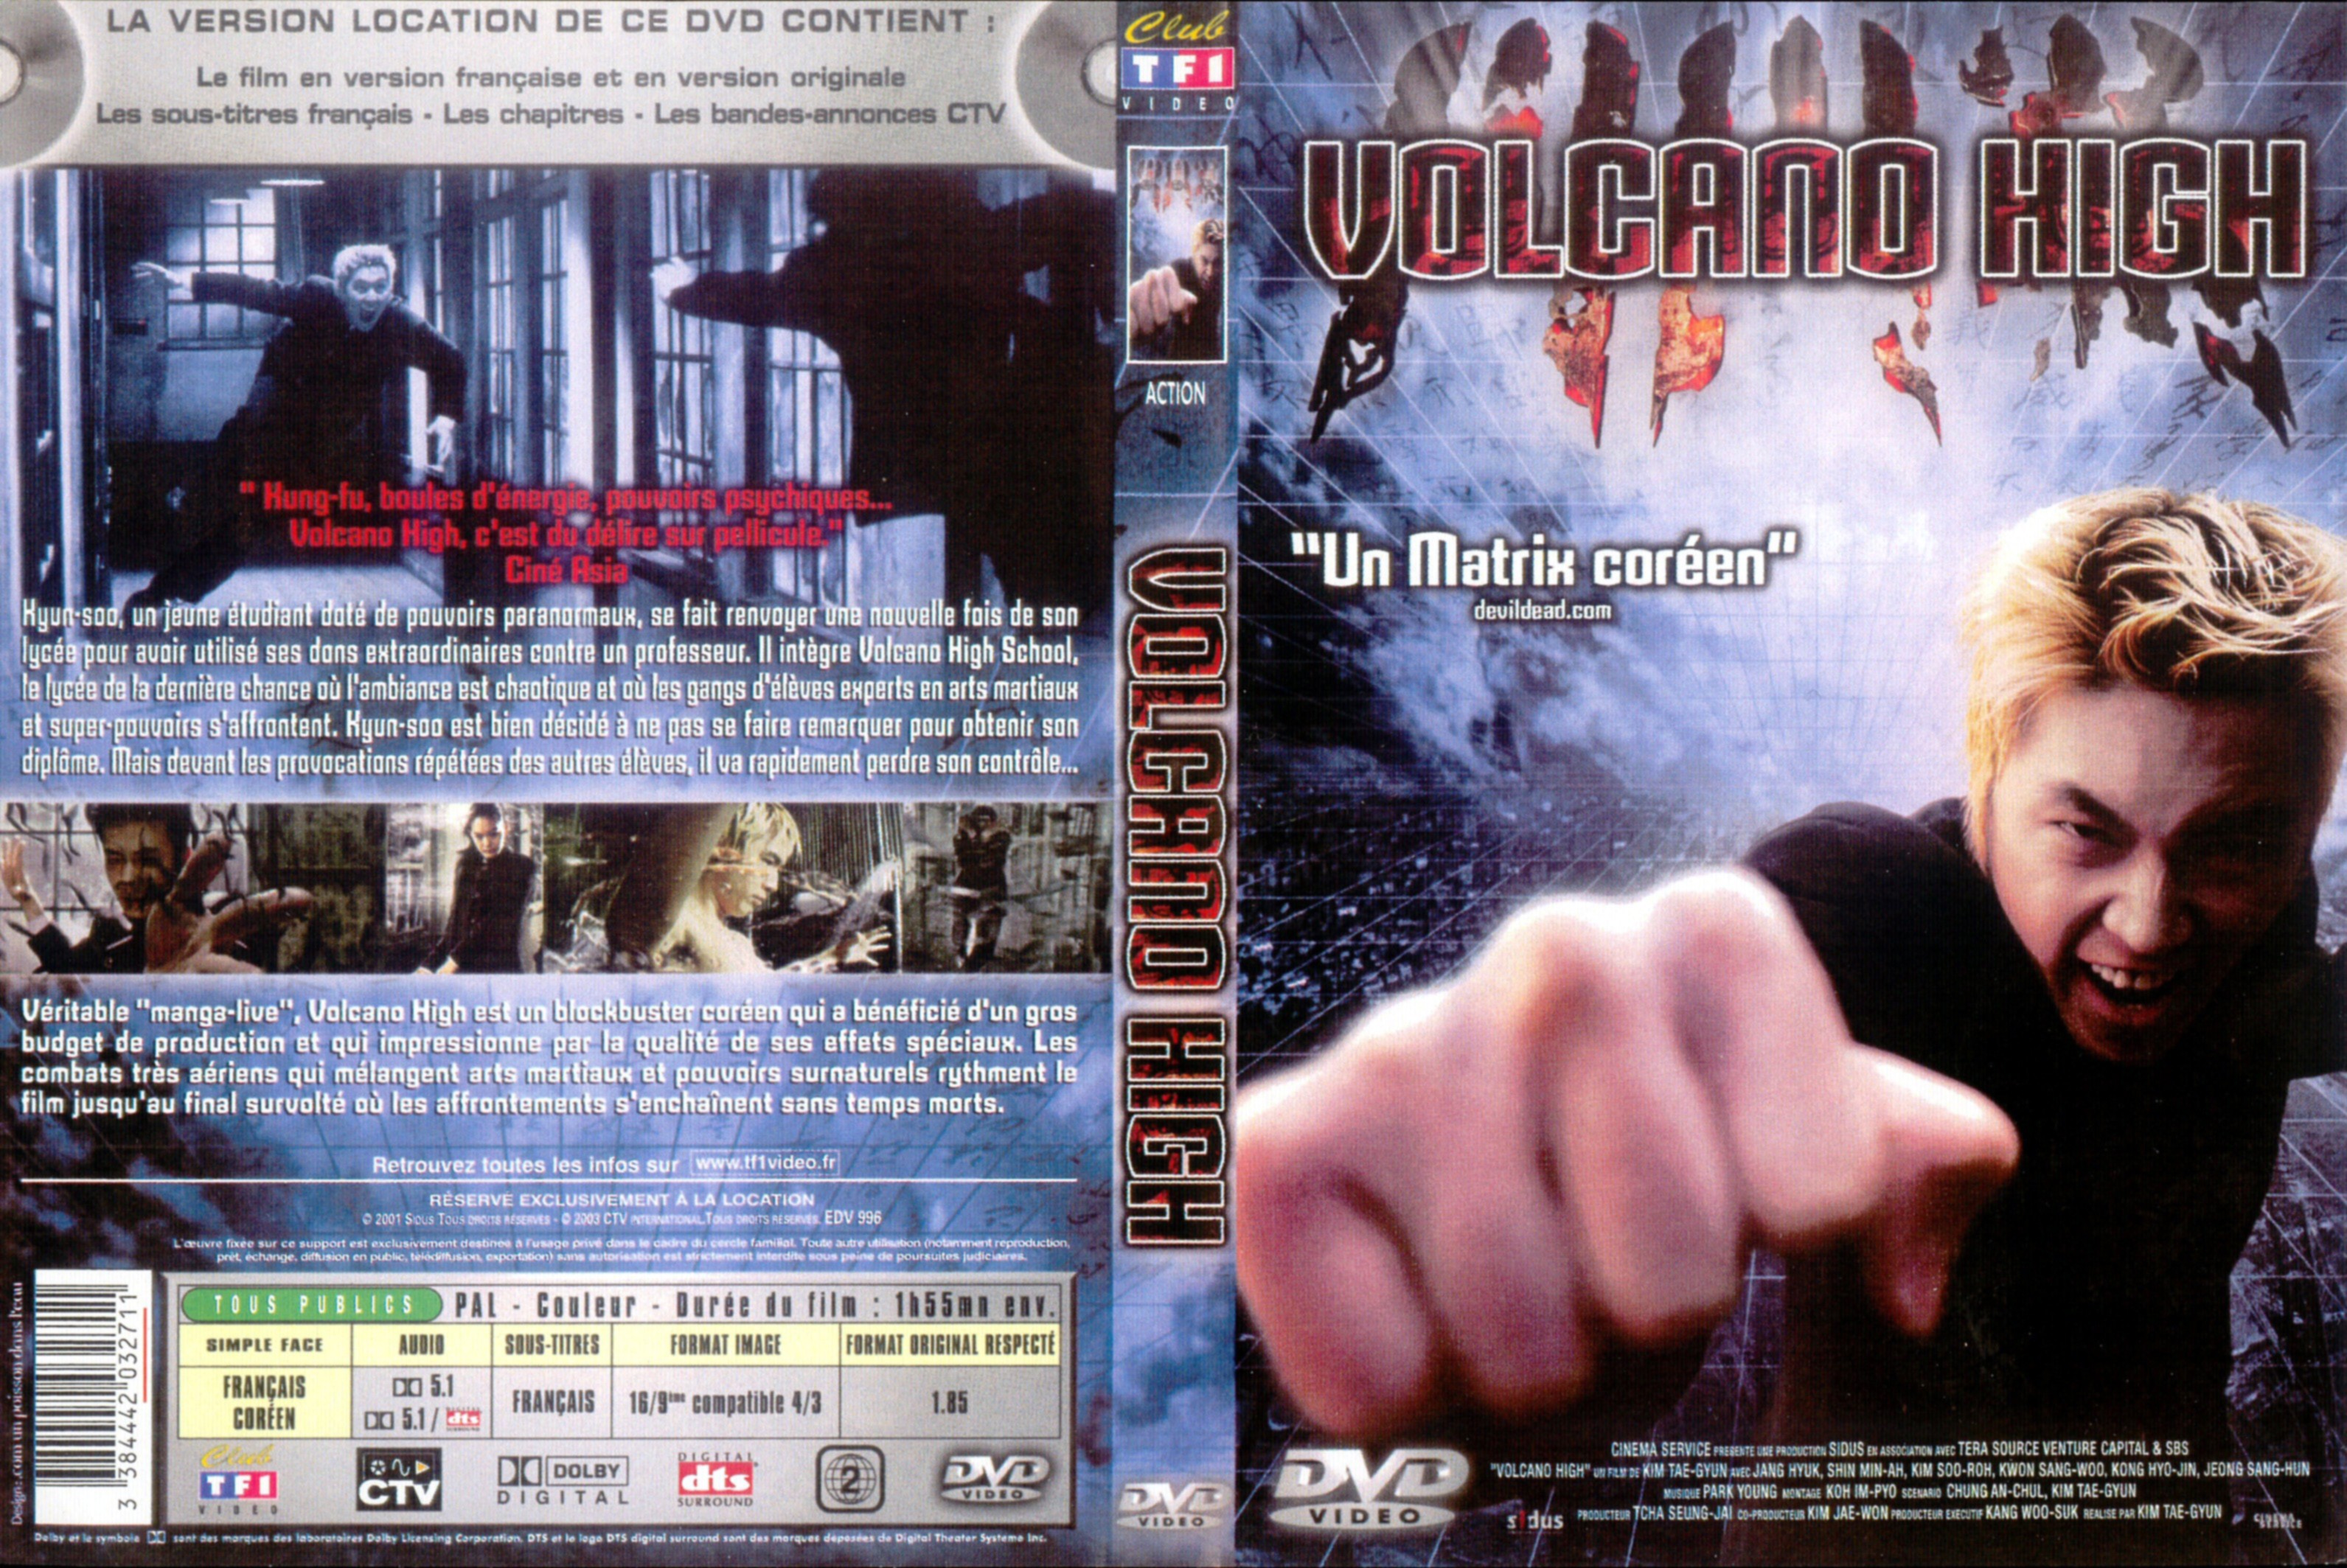 Jaquette DVD Volcano high